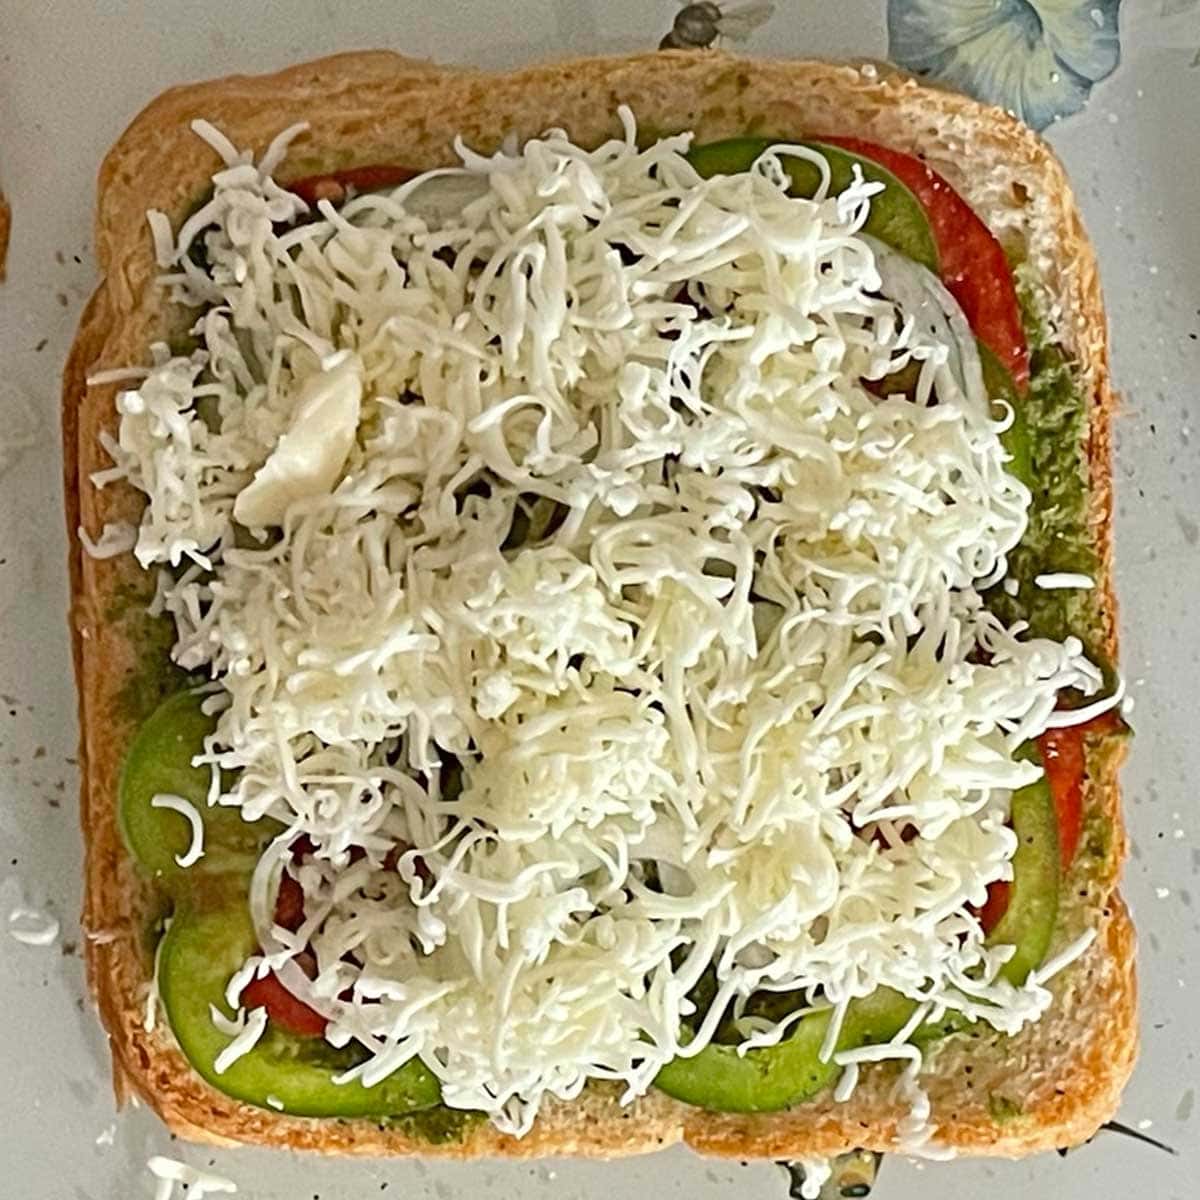 Mumbai sandwich layered with shredded cheese.